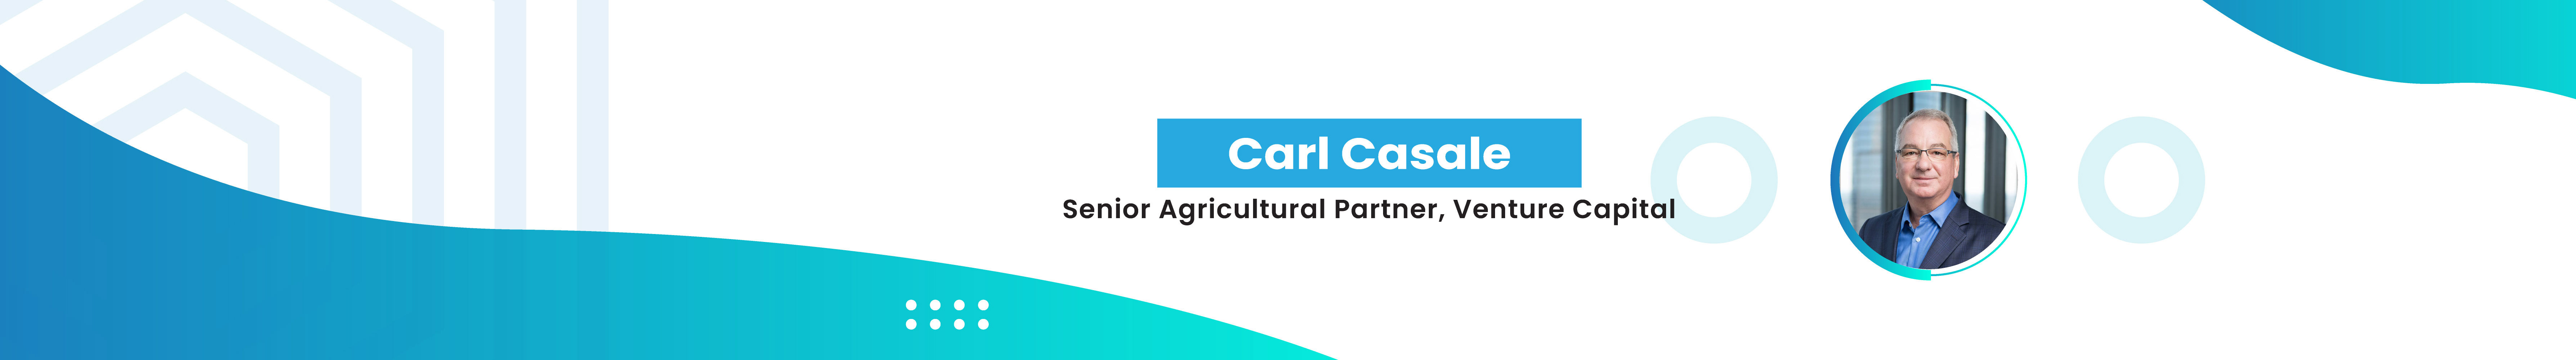 Carl Casale のプロファイルバナー